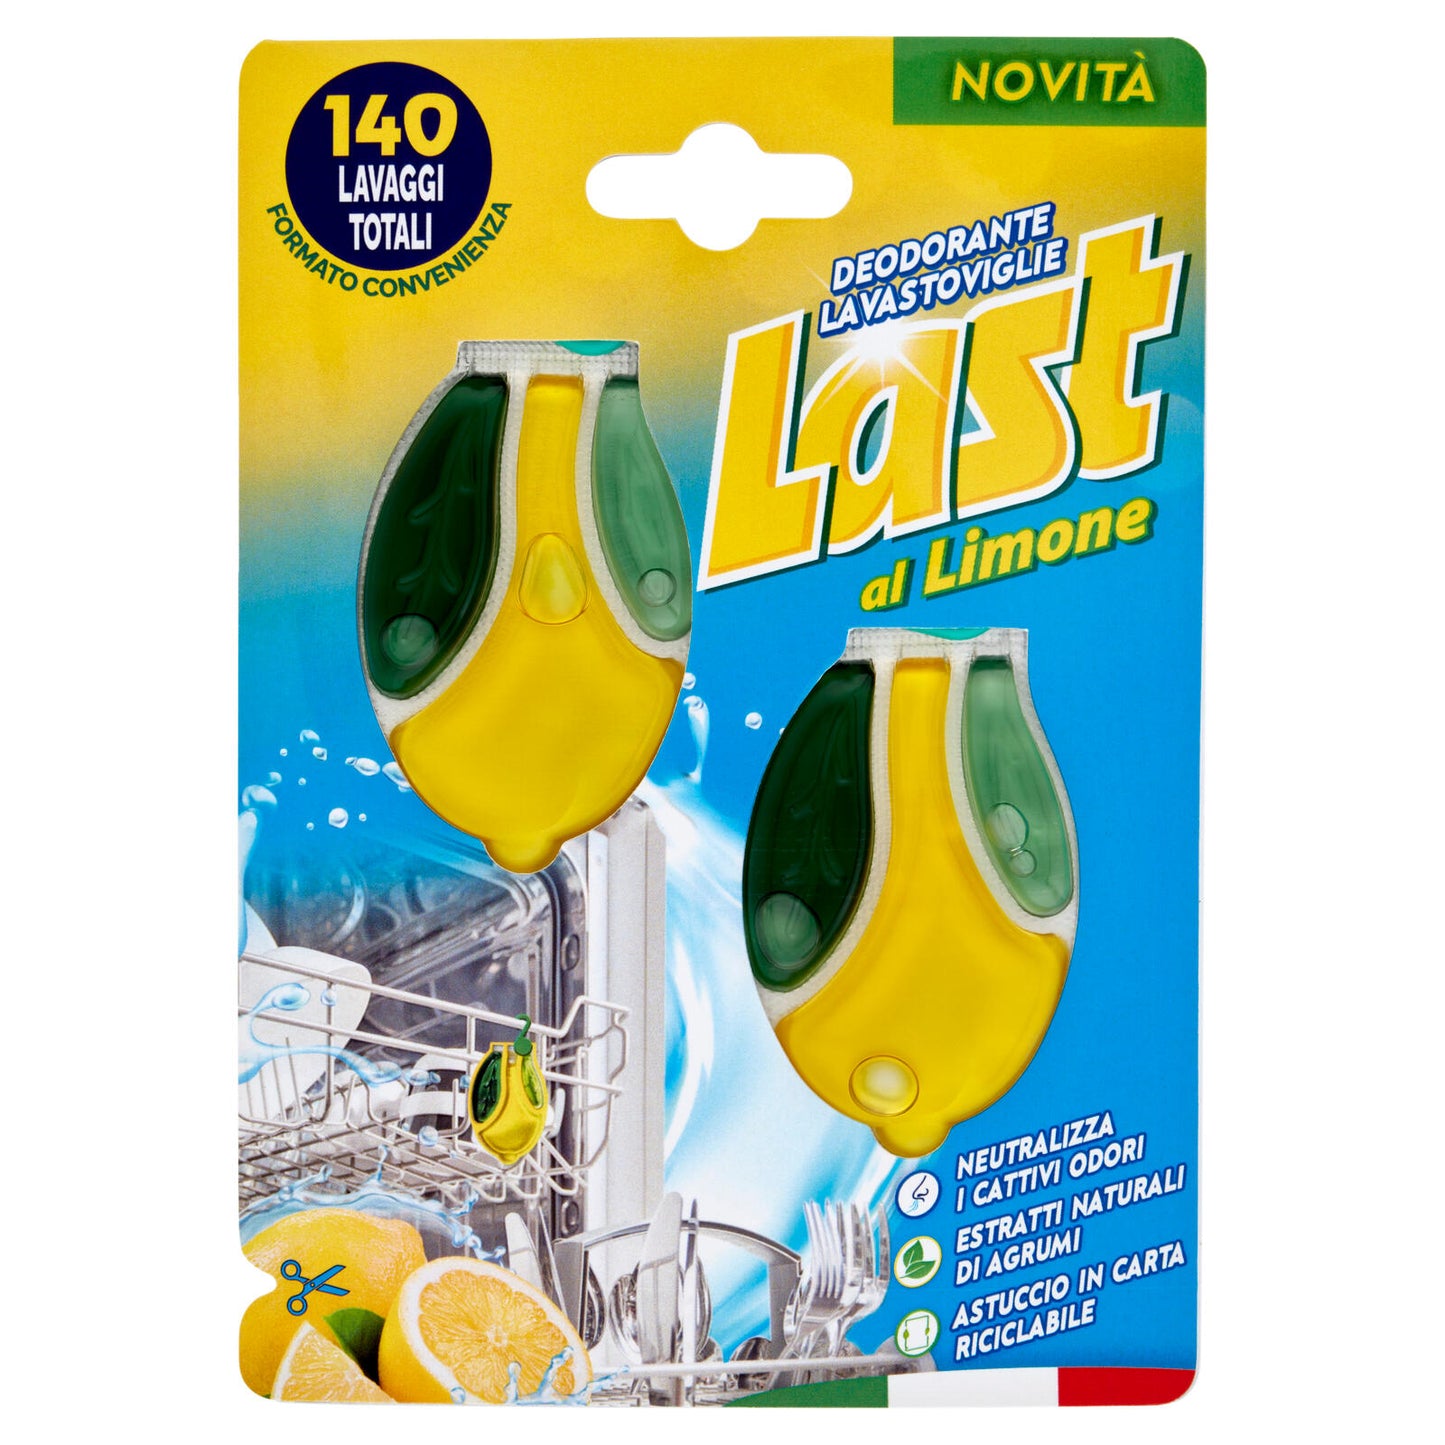 Last Deodorante Lavastoviglie al Limone 6 + 6 ml